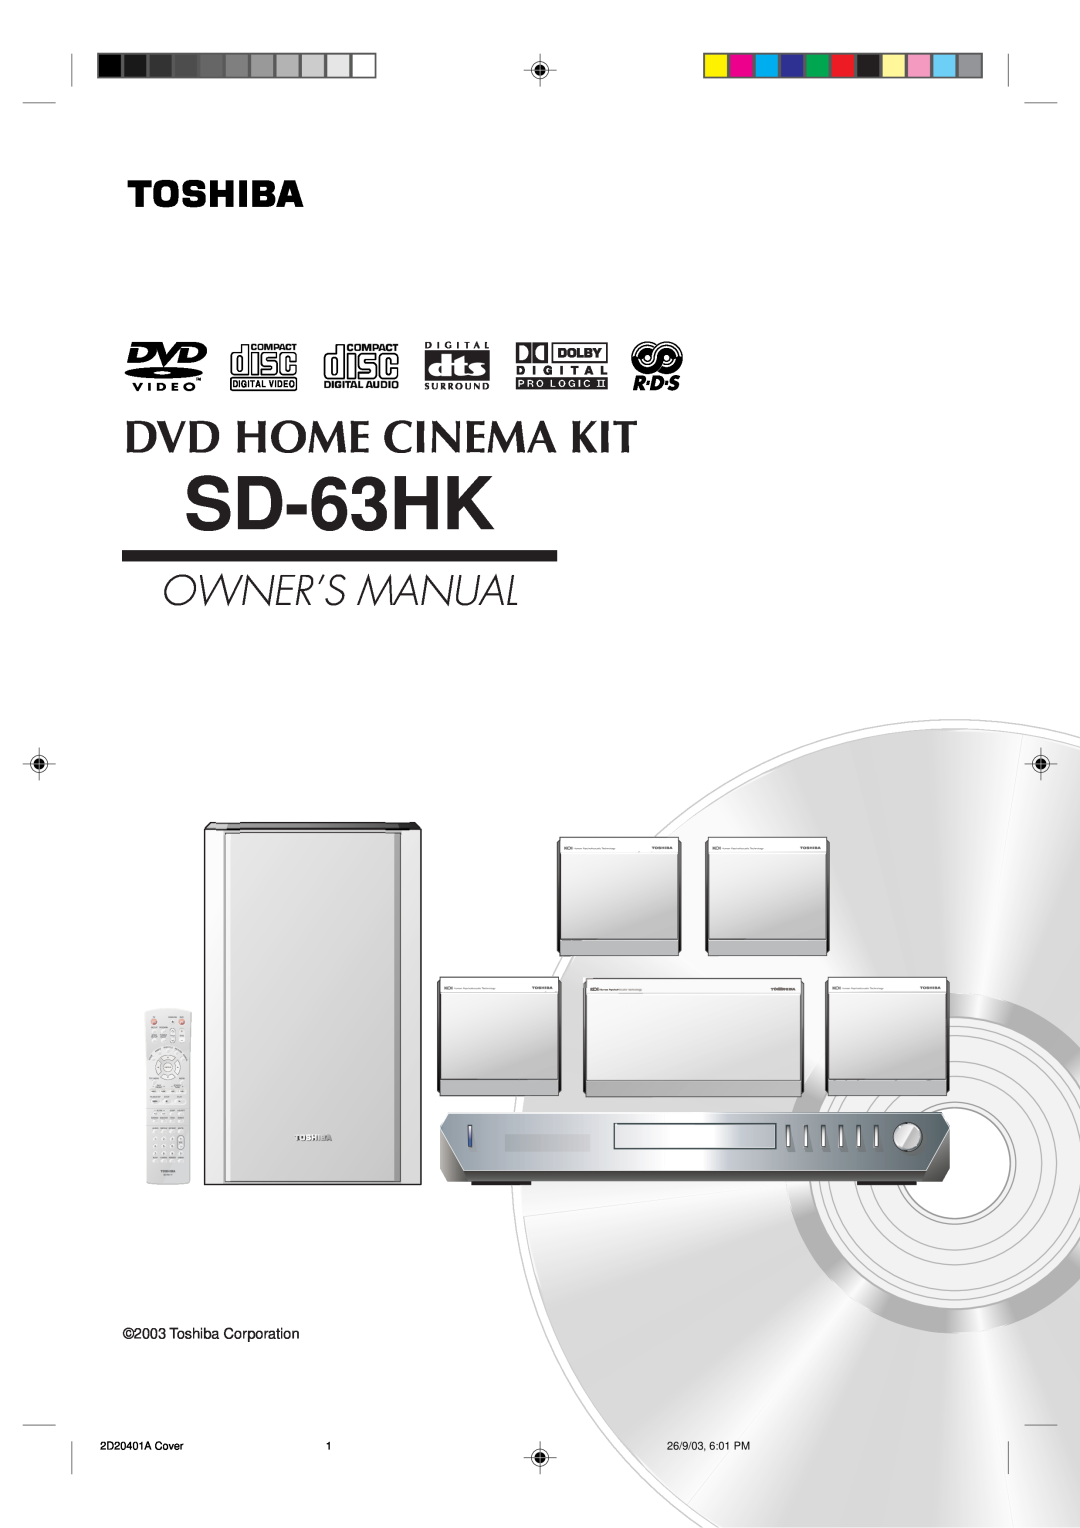 Kodak SD-63HK owner manual Dvd Home Cinema Kit, Owner’S Manual, Digital Video 